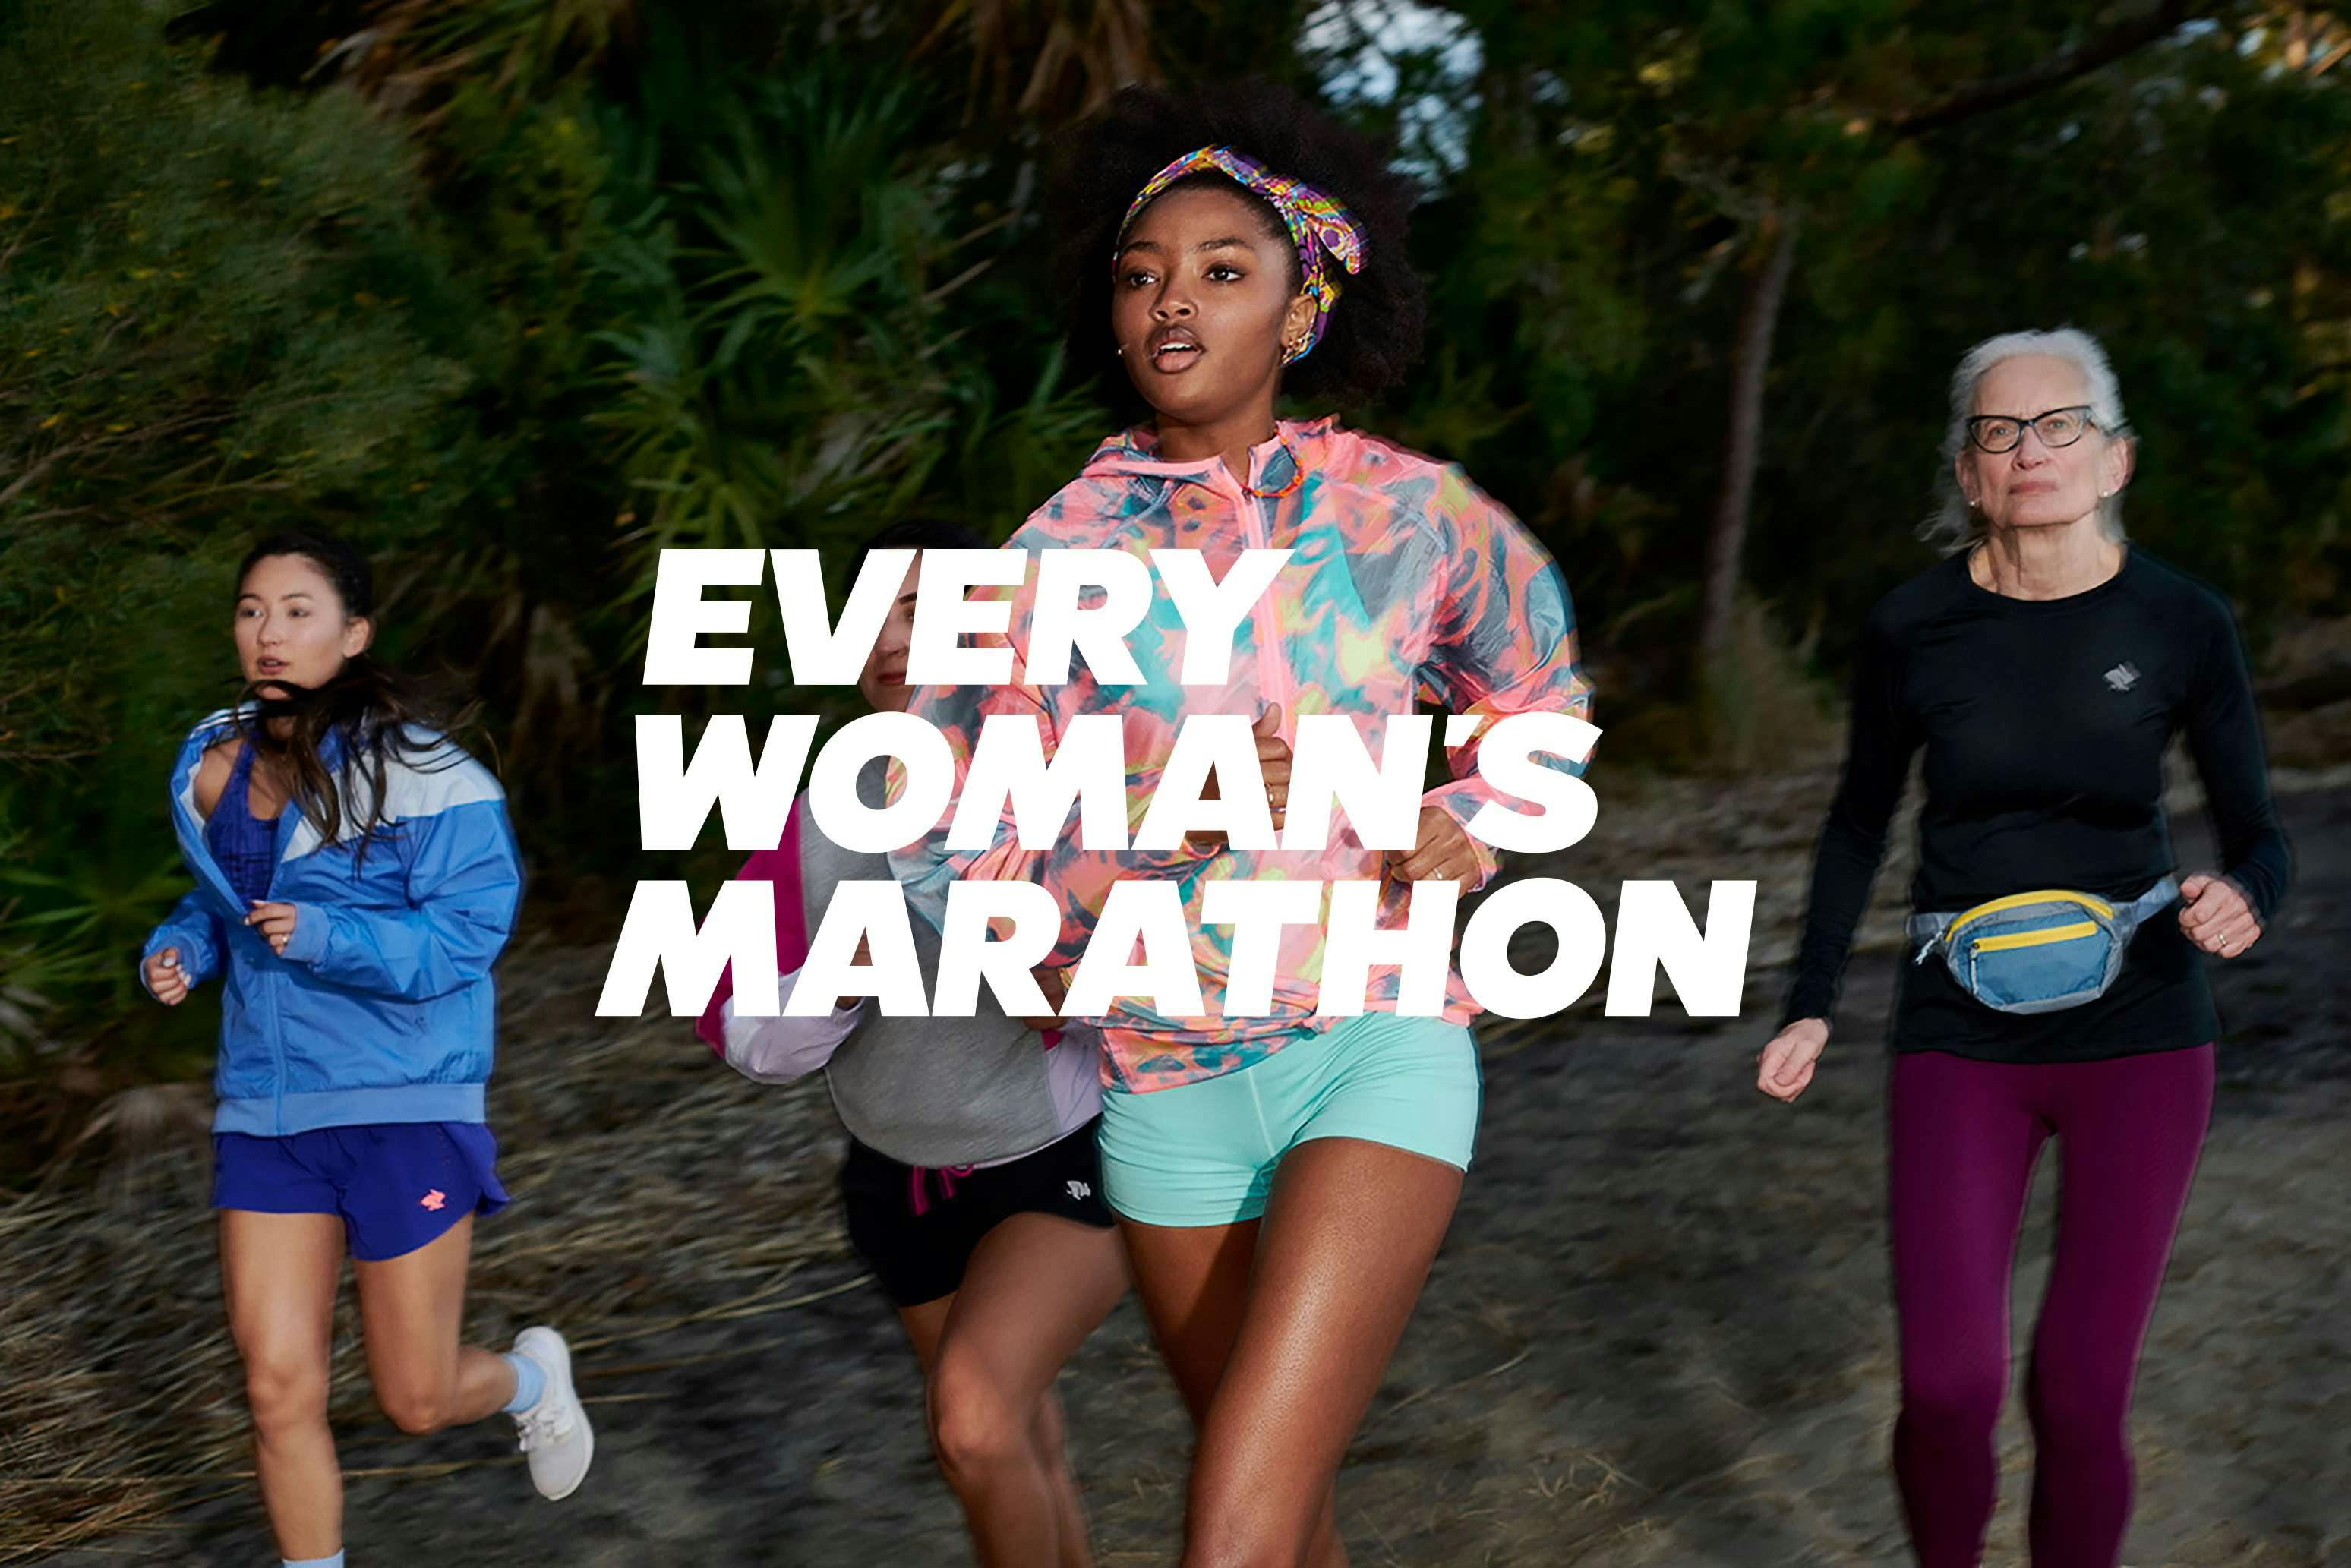 Every Woman's Marathon Logotype with image